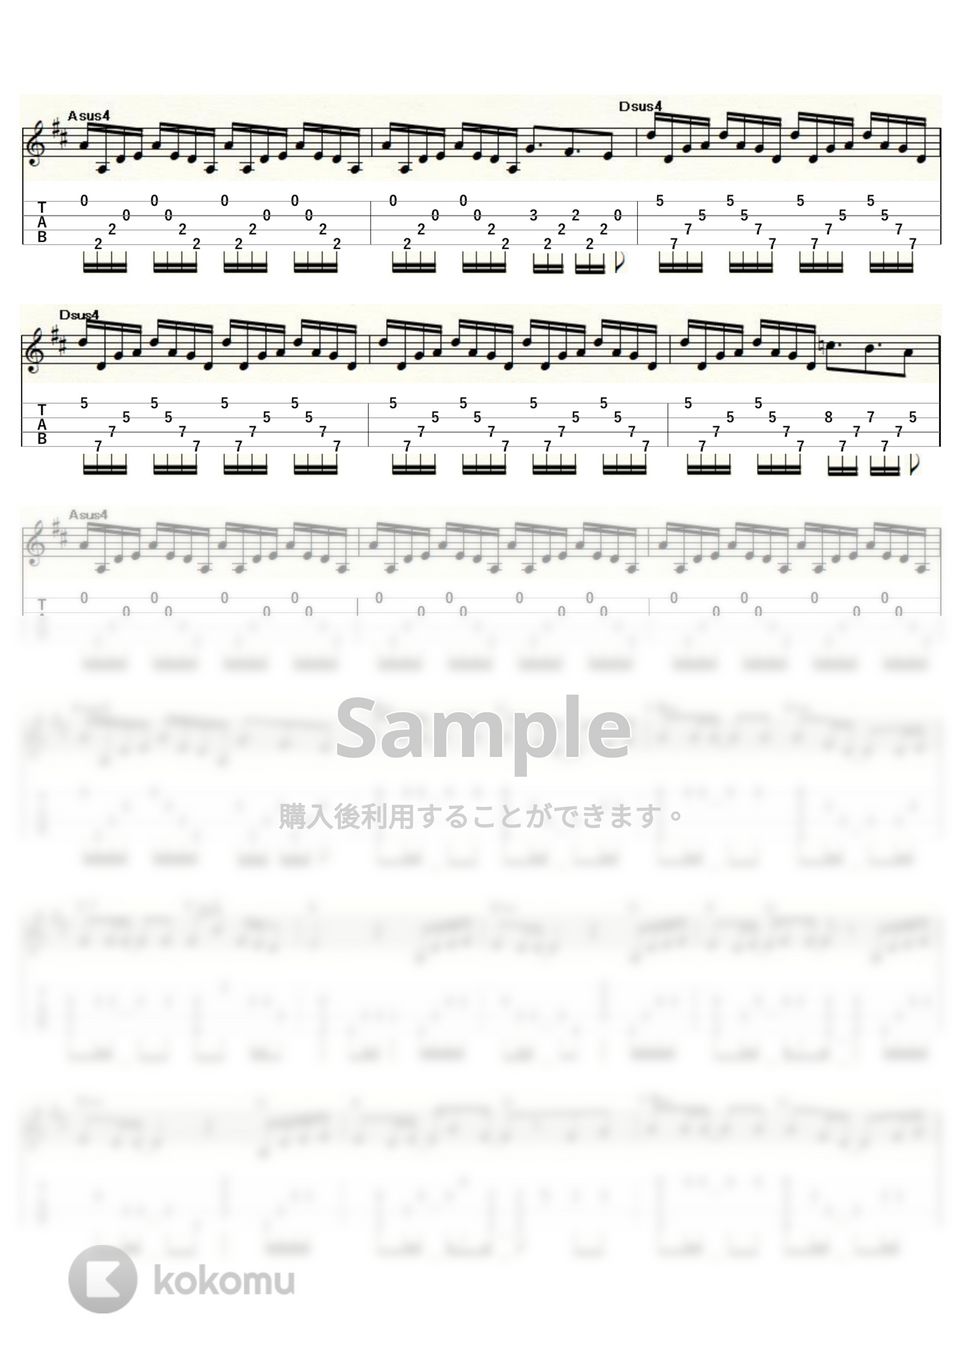 久石譲/菊次郎の夏 - Summer (ｳｸﾚﾚｿﾛ / Low-G / 中級) by ukulelepapa